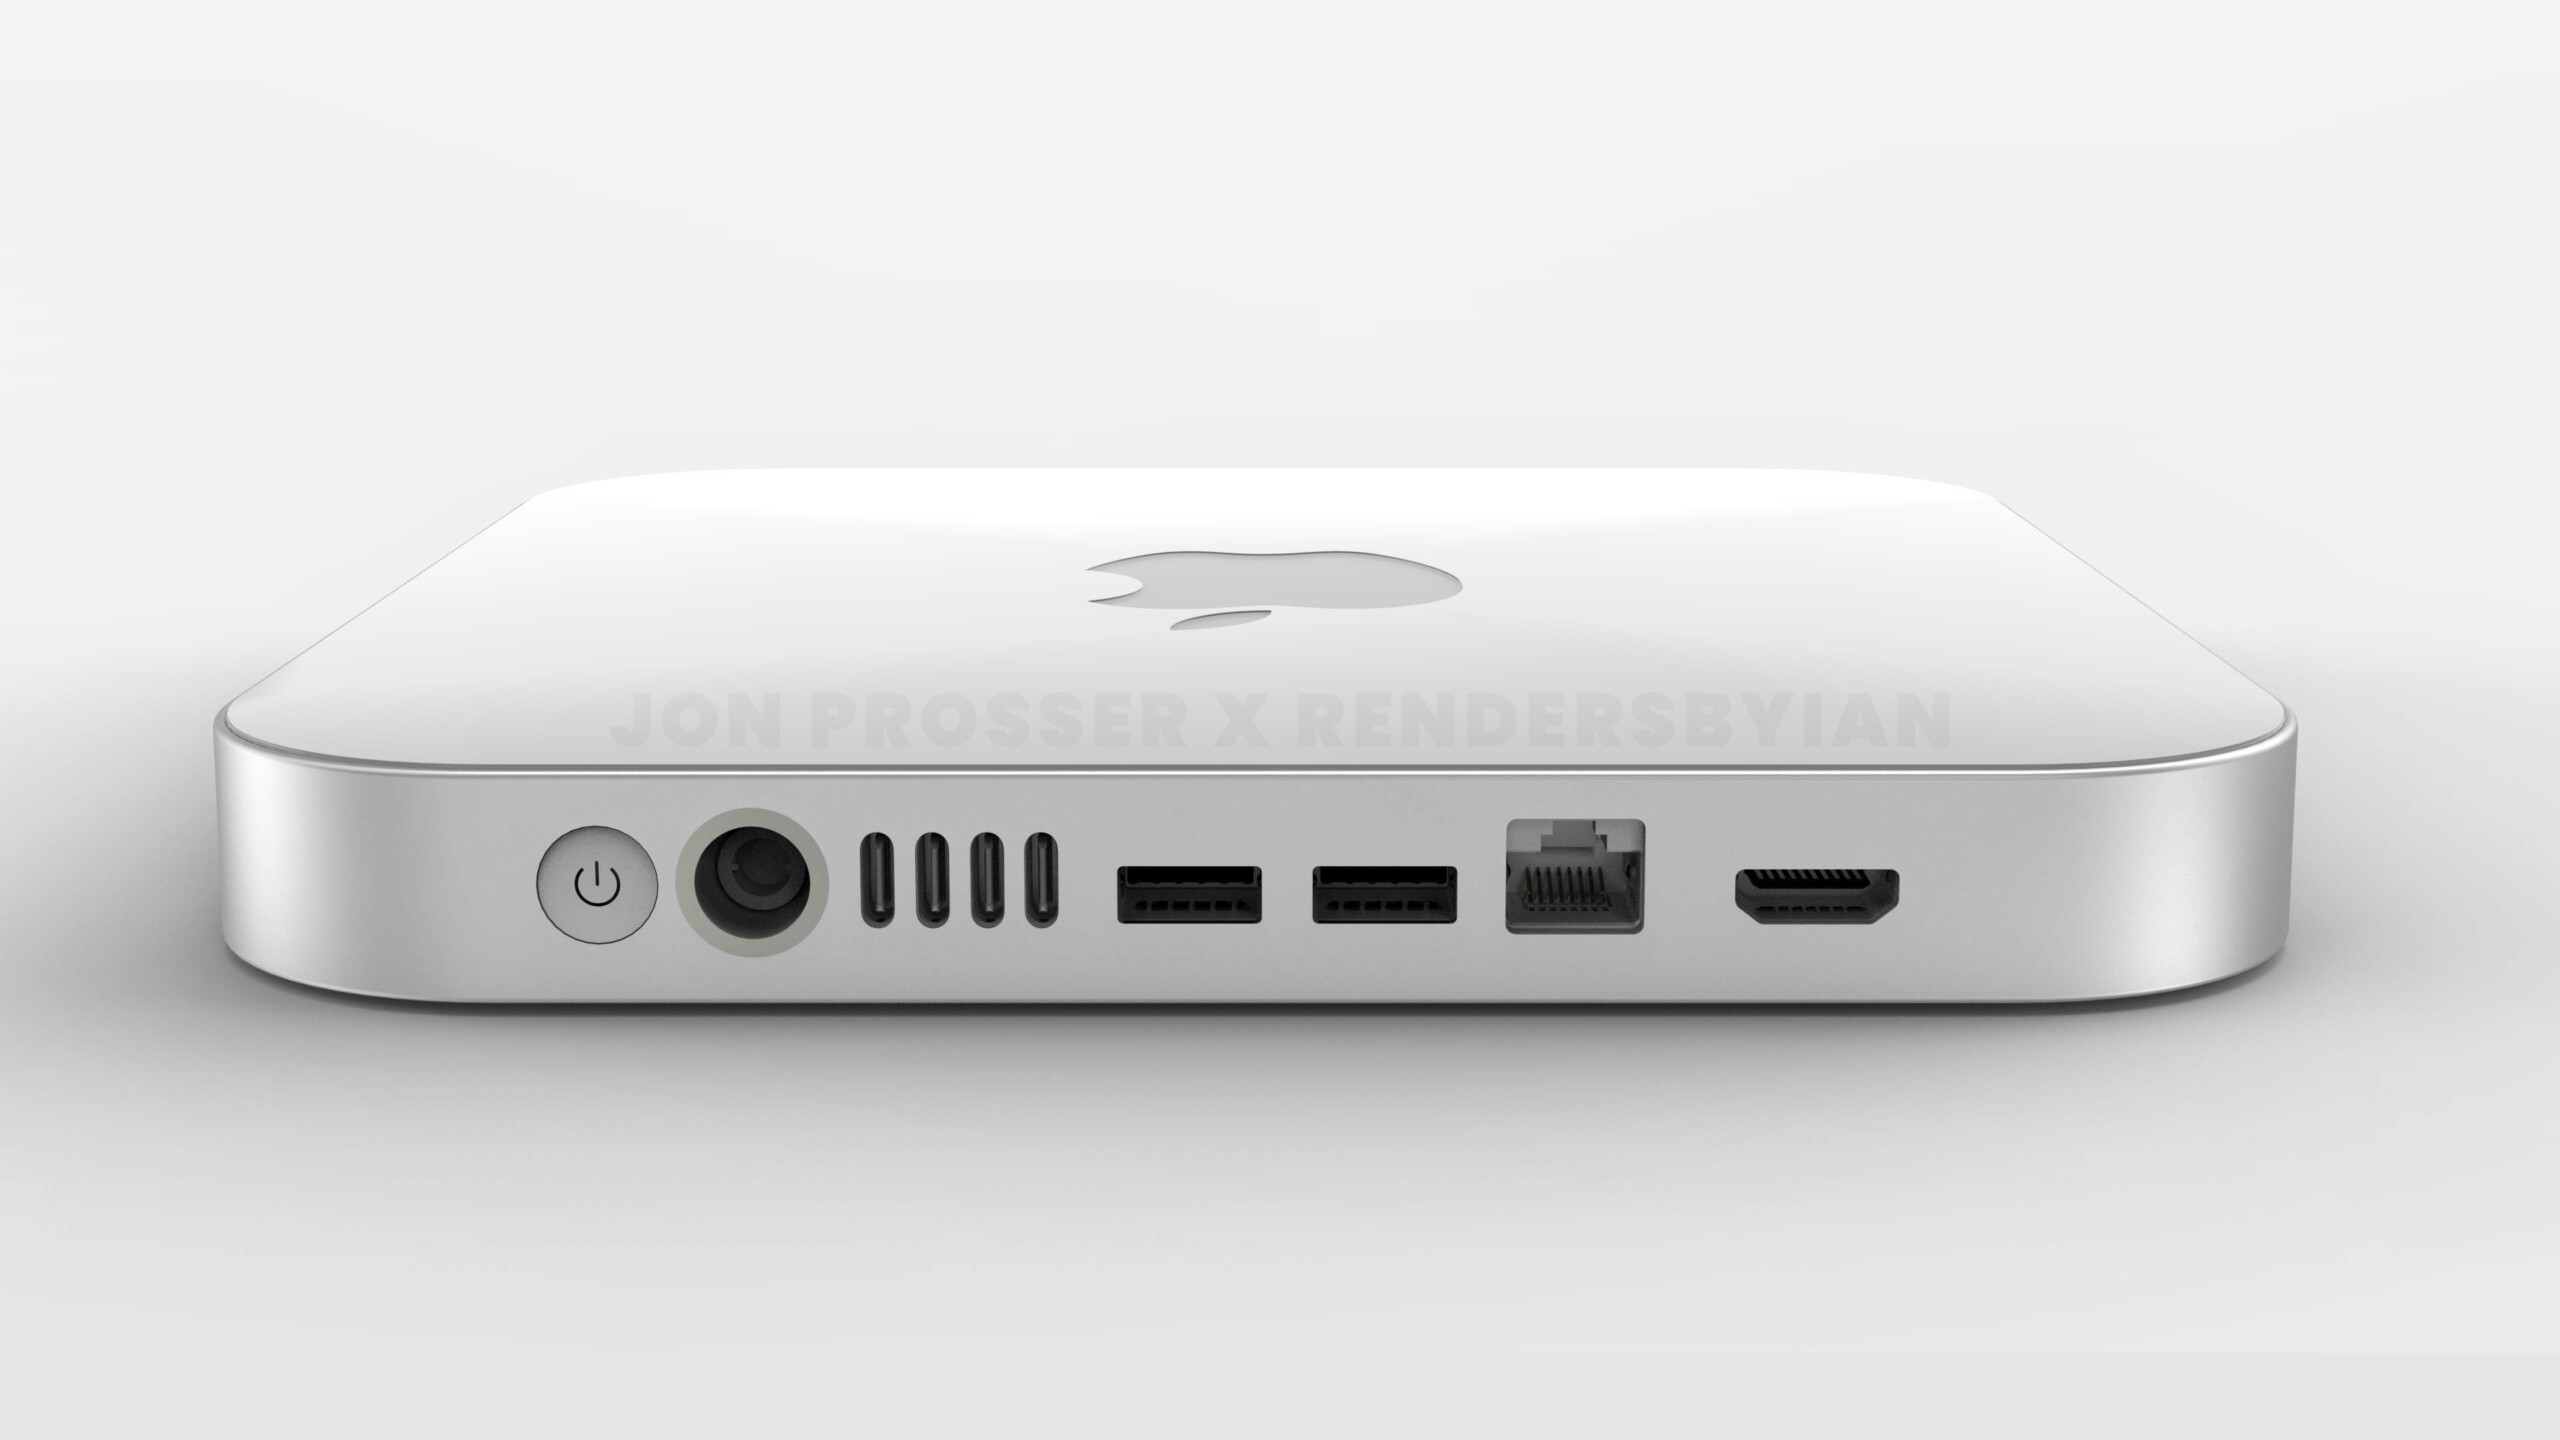 Le Mac Mini "haut de gamme" selon Jon Prosser